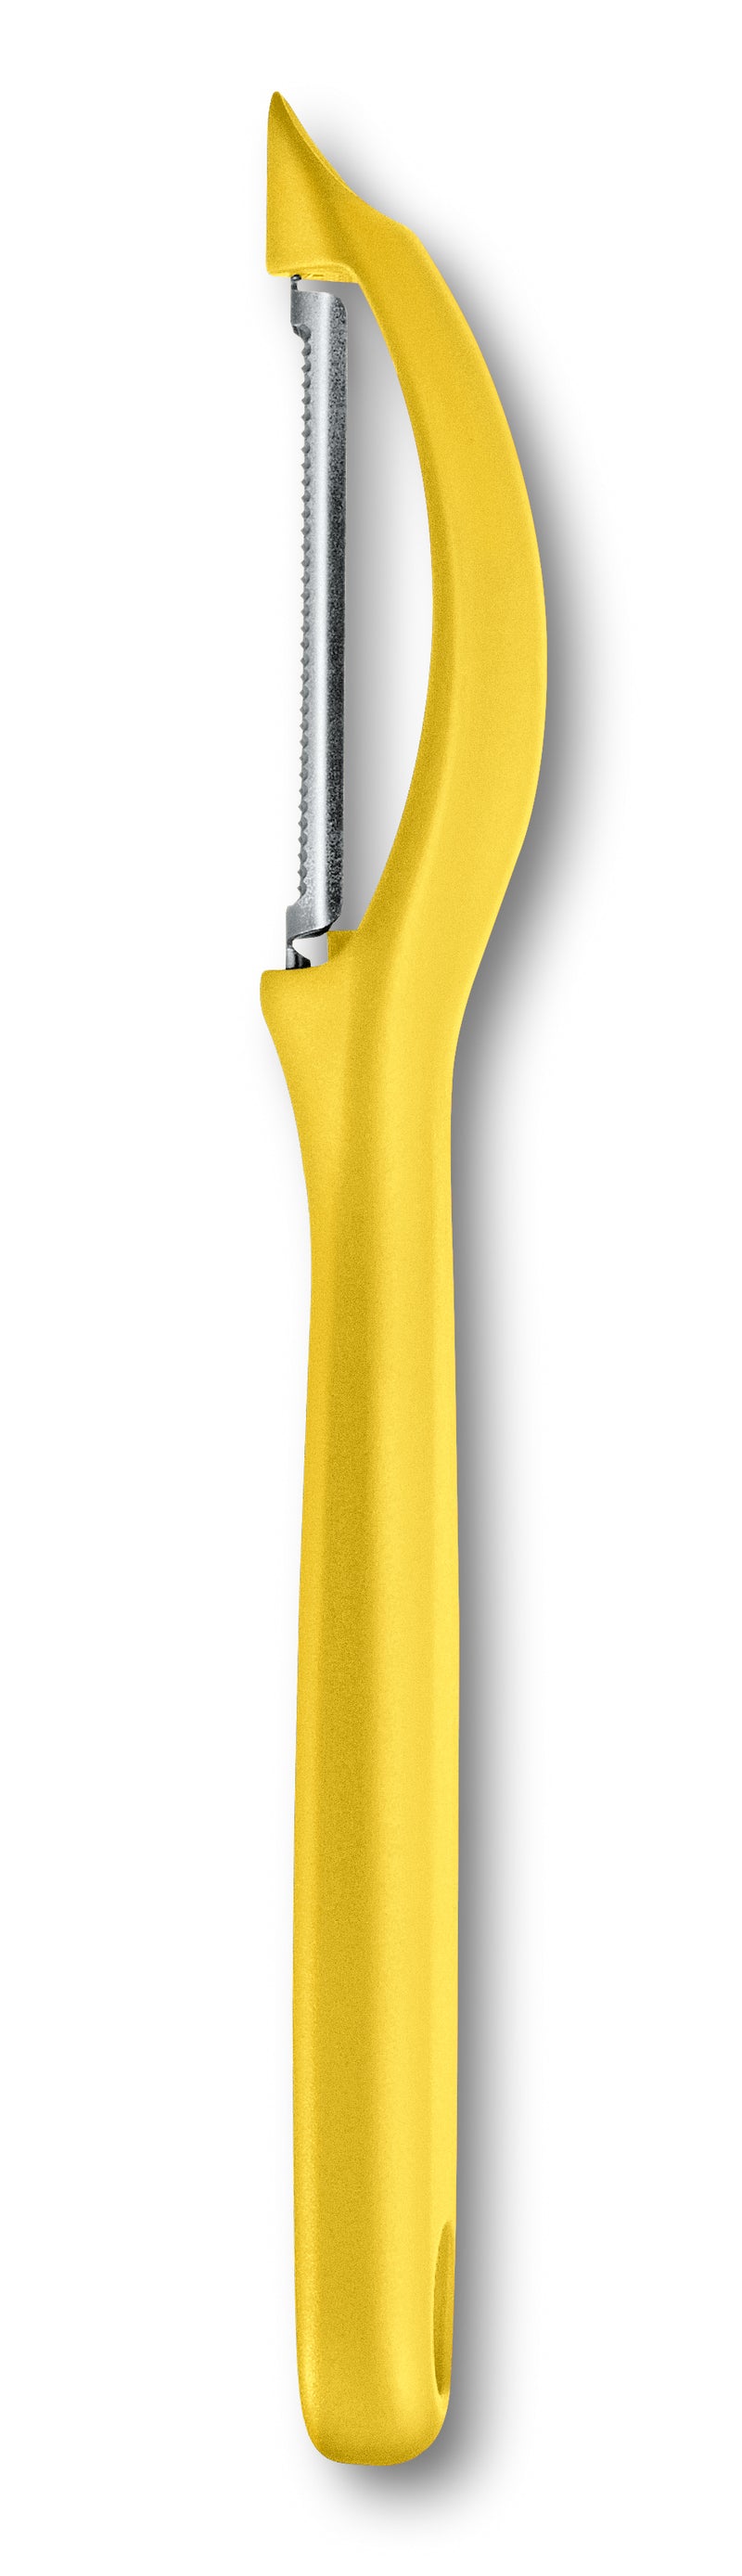 Victorinox Swiss Classic Kitchen Knife Set of 2-Straight Edge Knife & Universal Peeler,Yellow